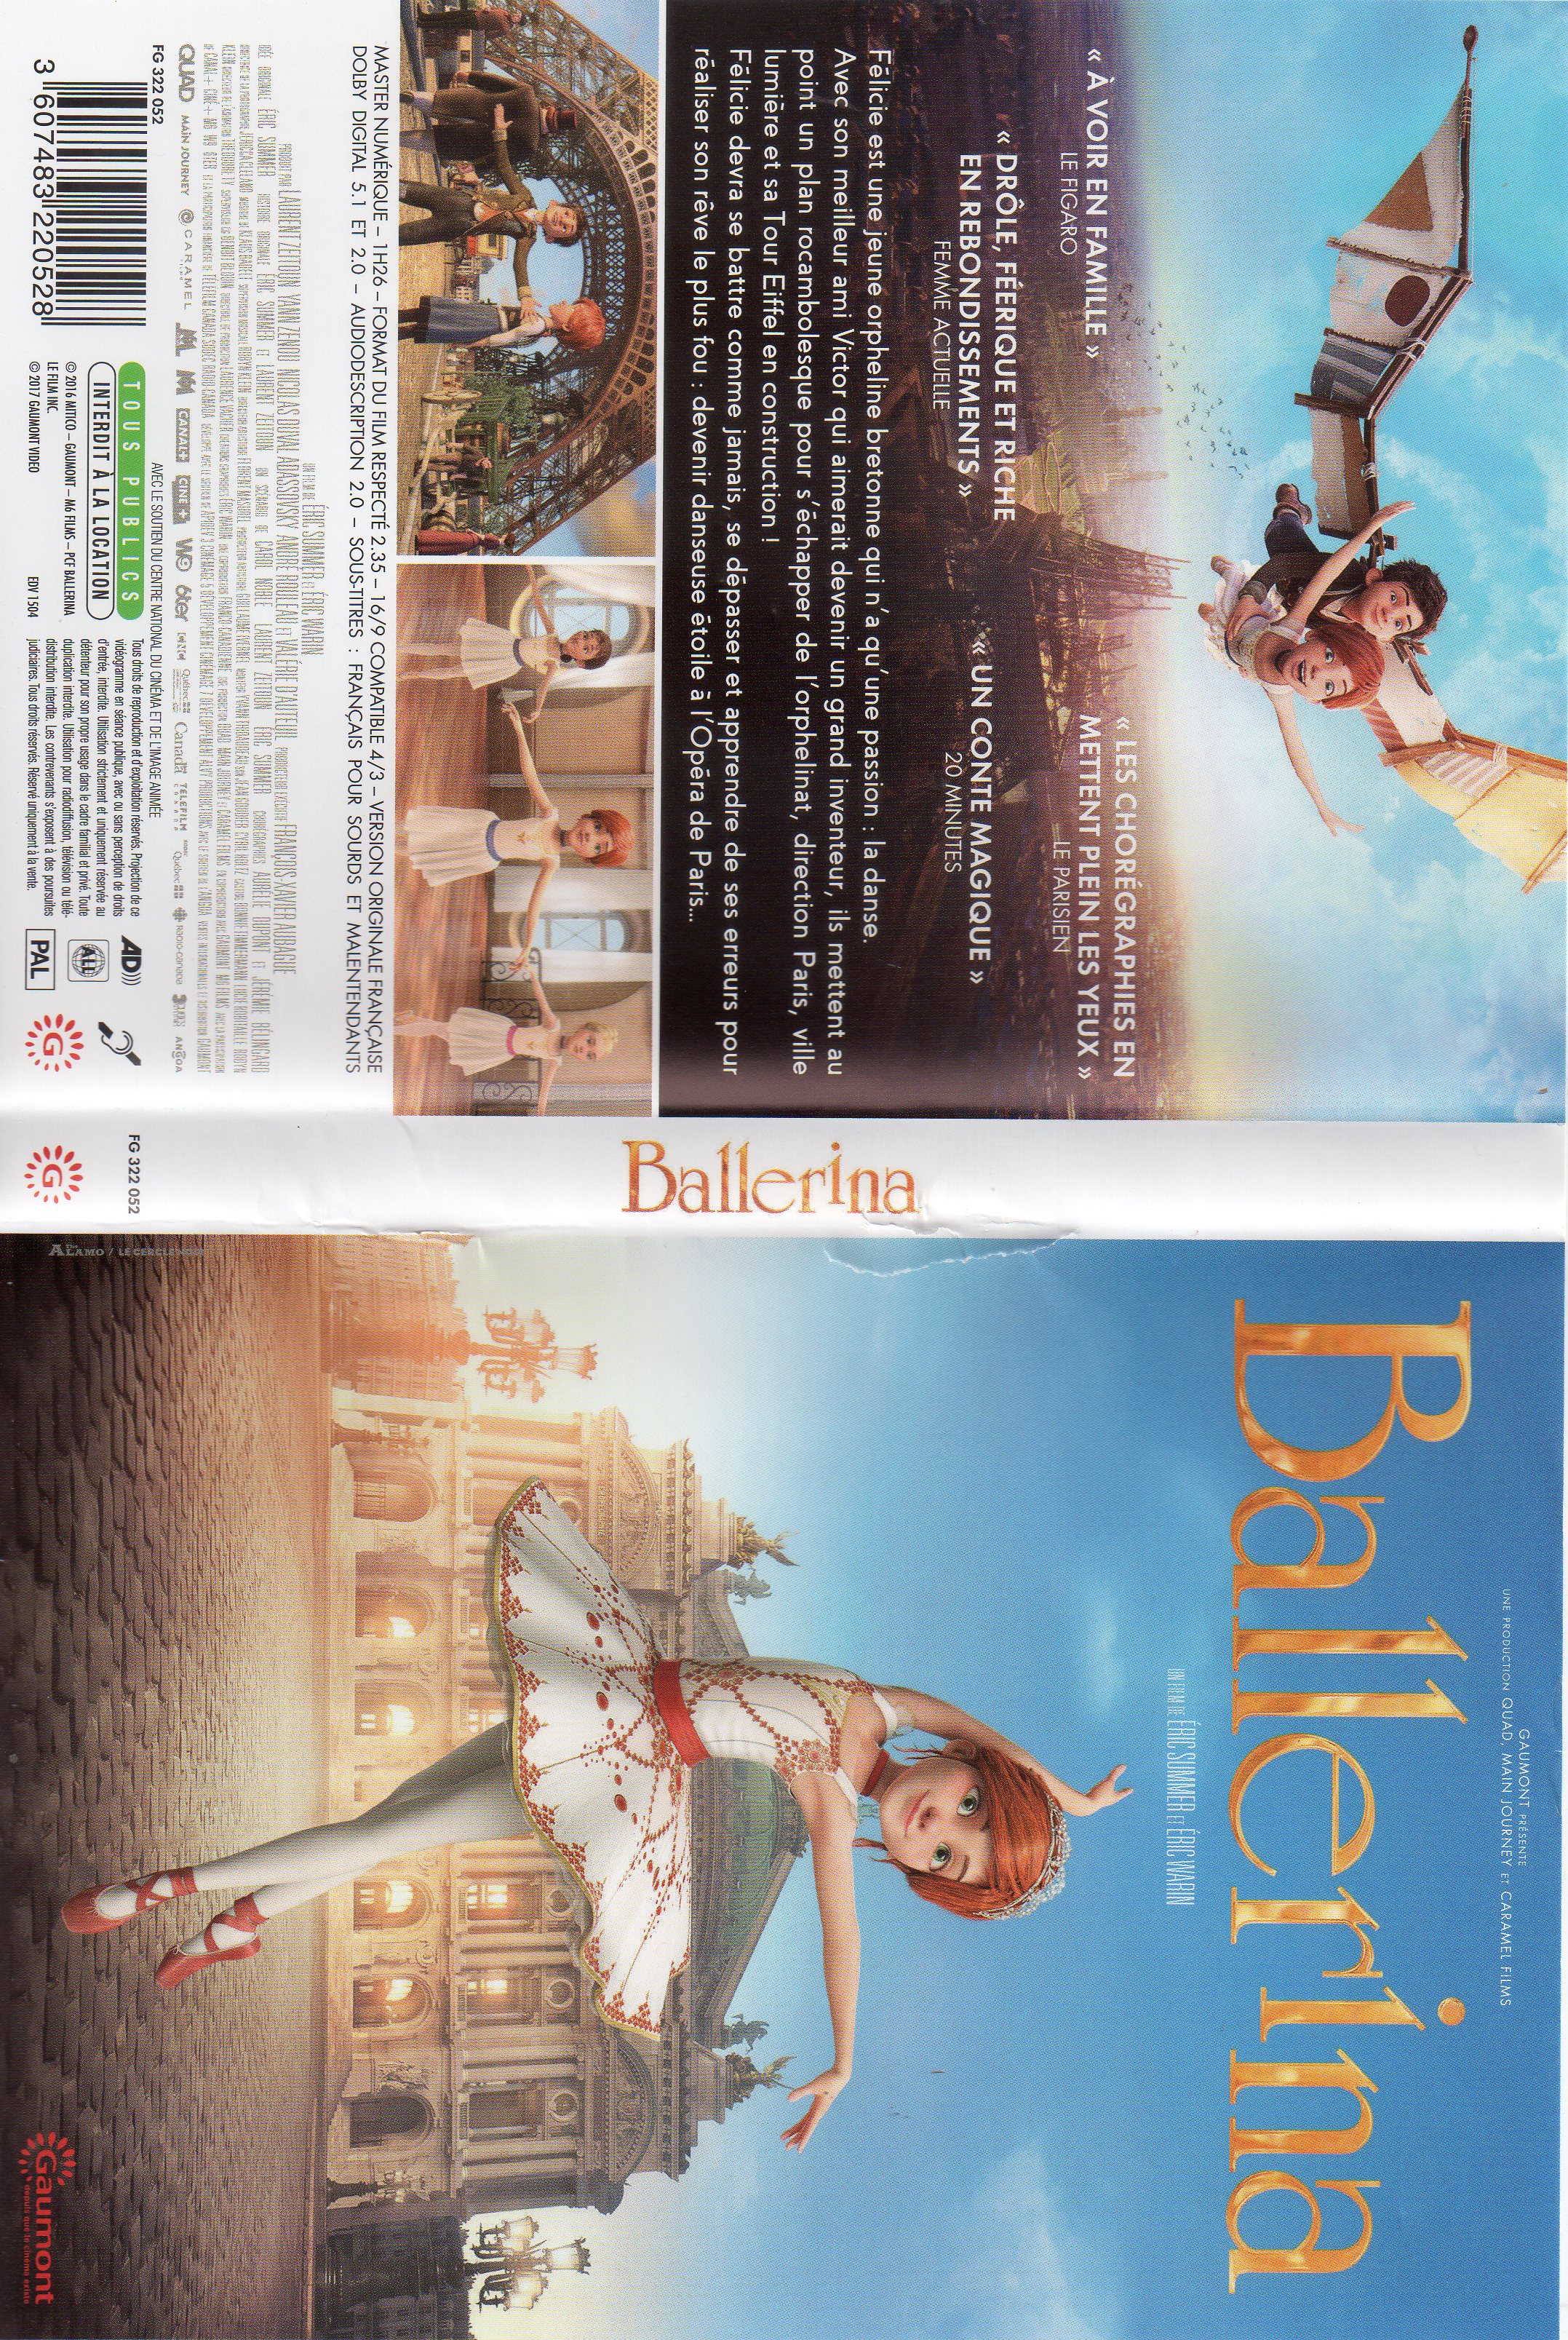 Jaquette DVD Ballerina v2